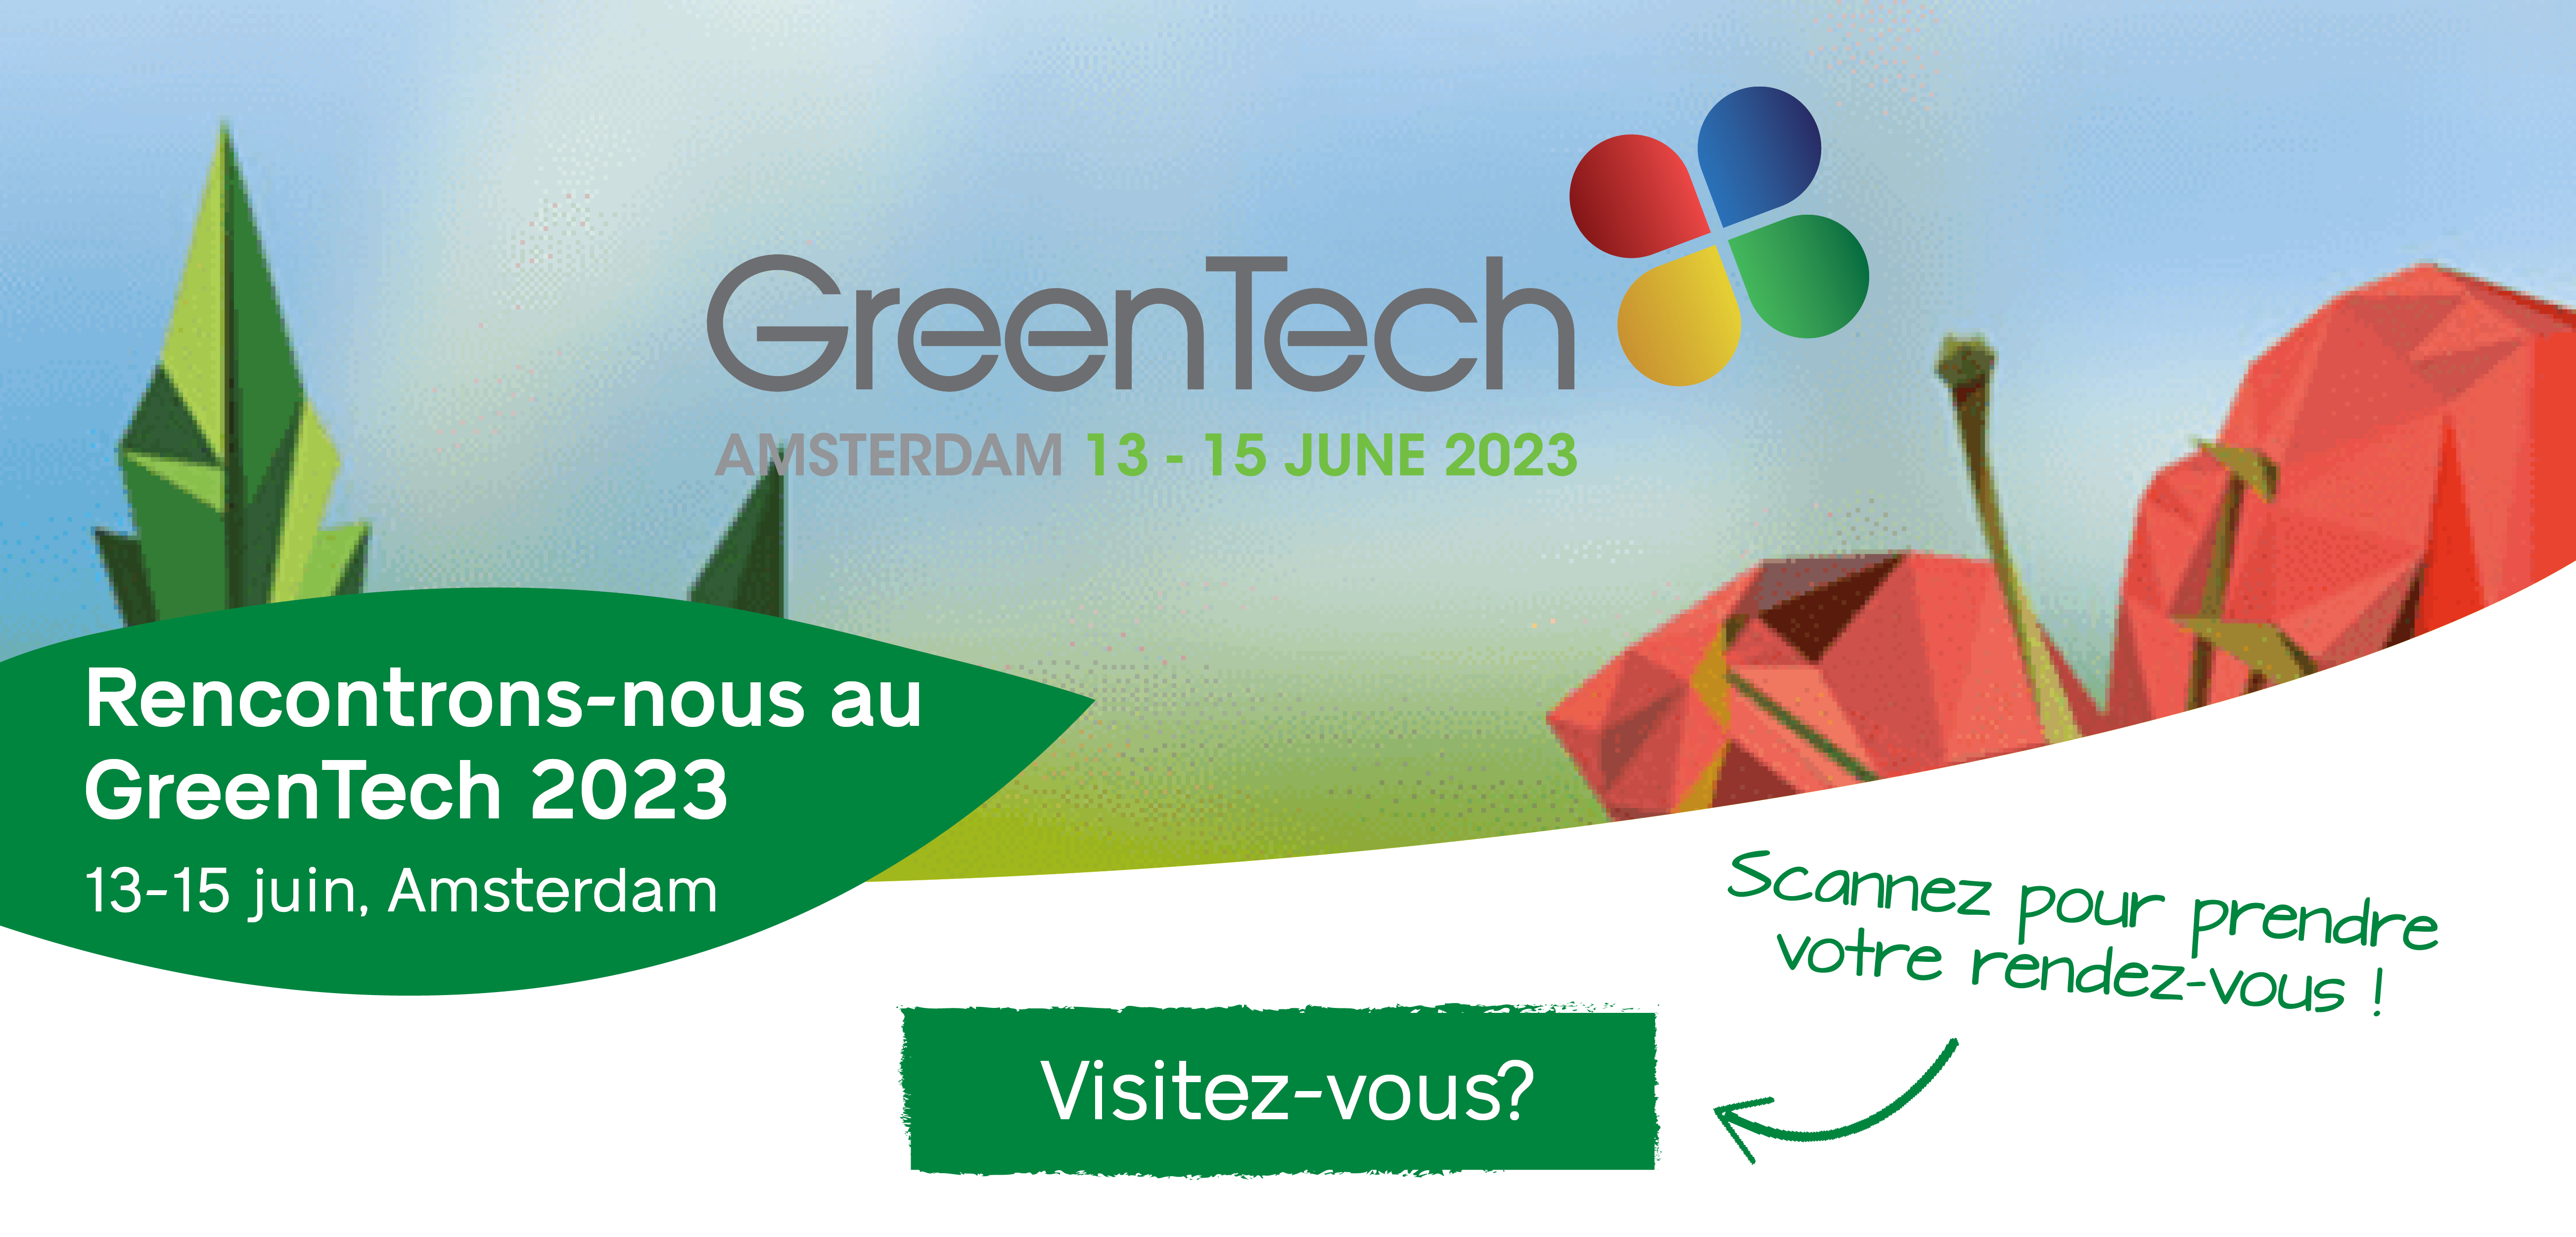 https://www.vaniperen.com/fr/wp-content/uploads/sites/2/2023/05/VII-FR-GreenTech-2023-banner.png